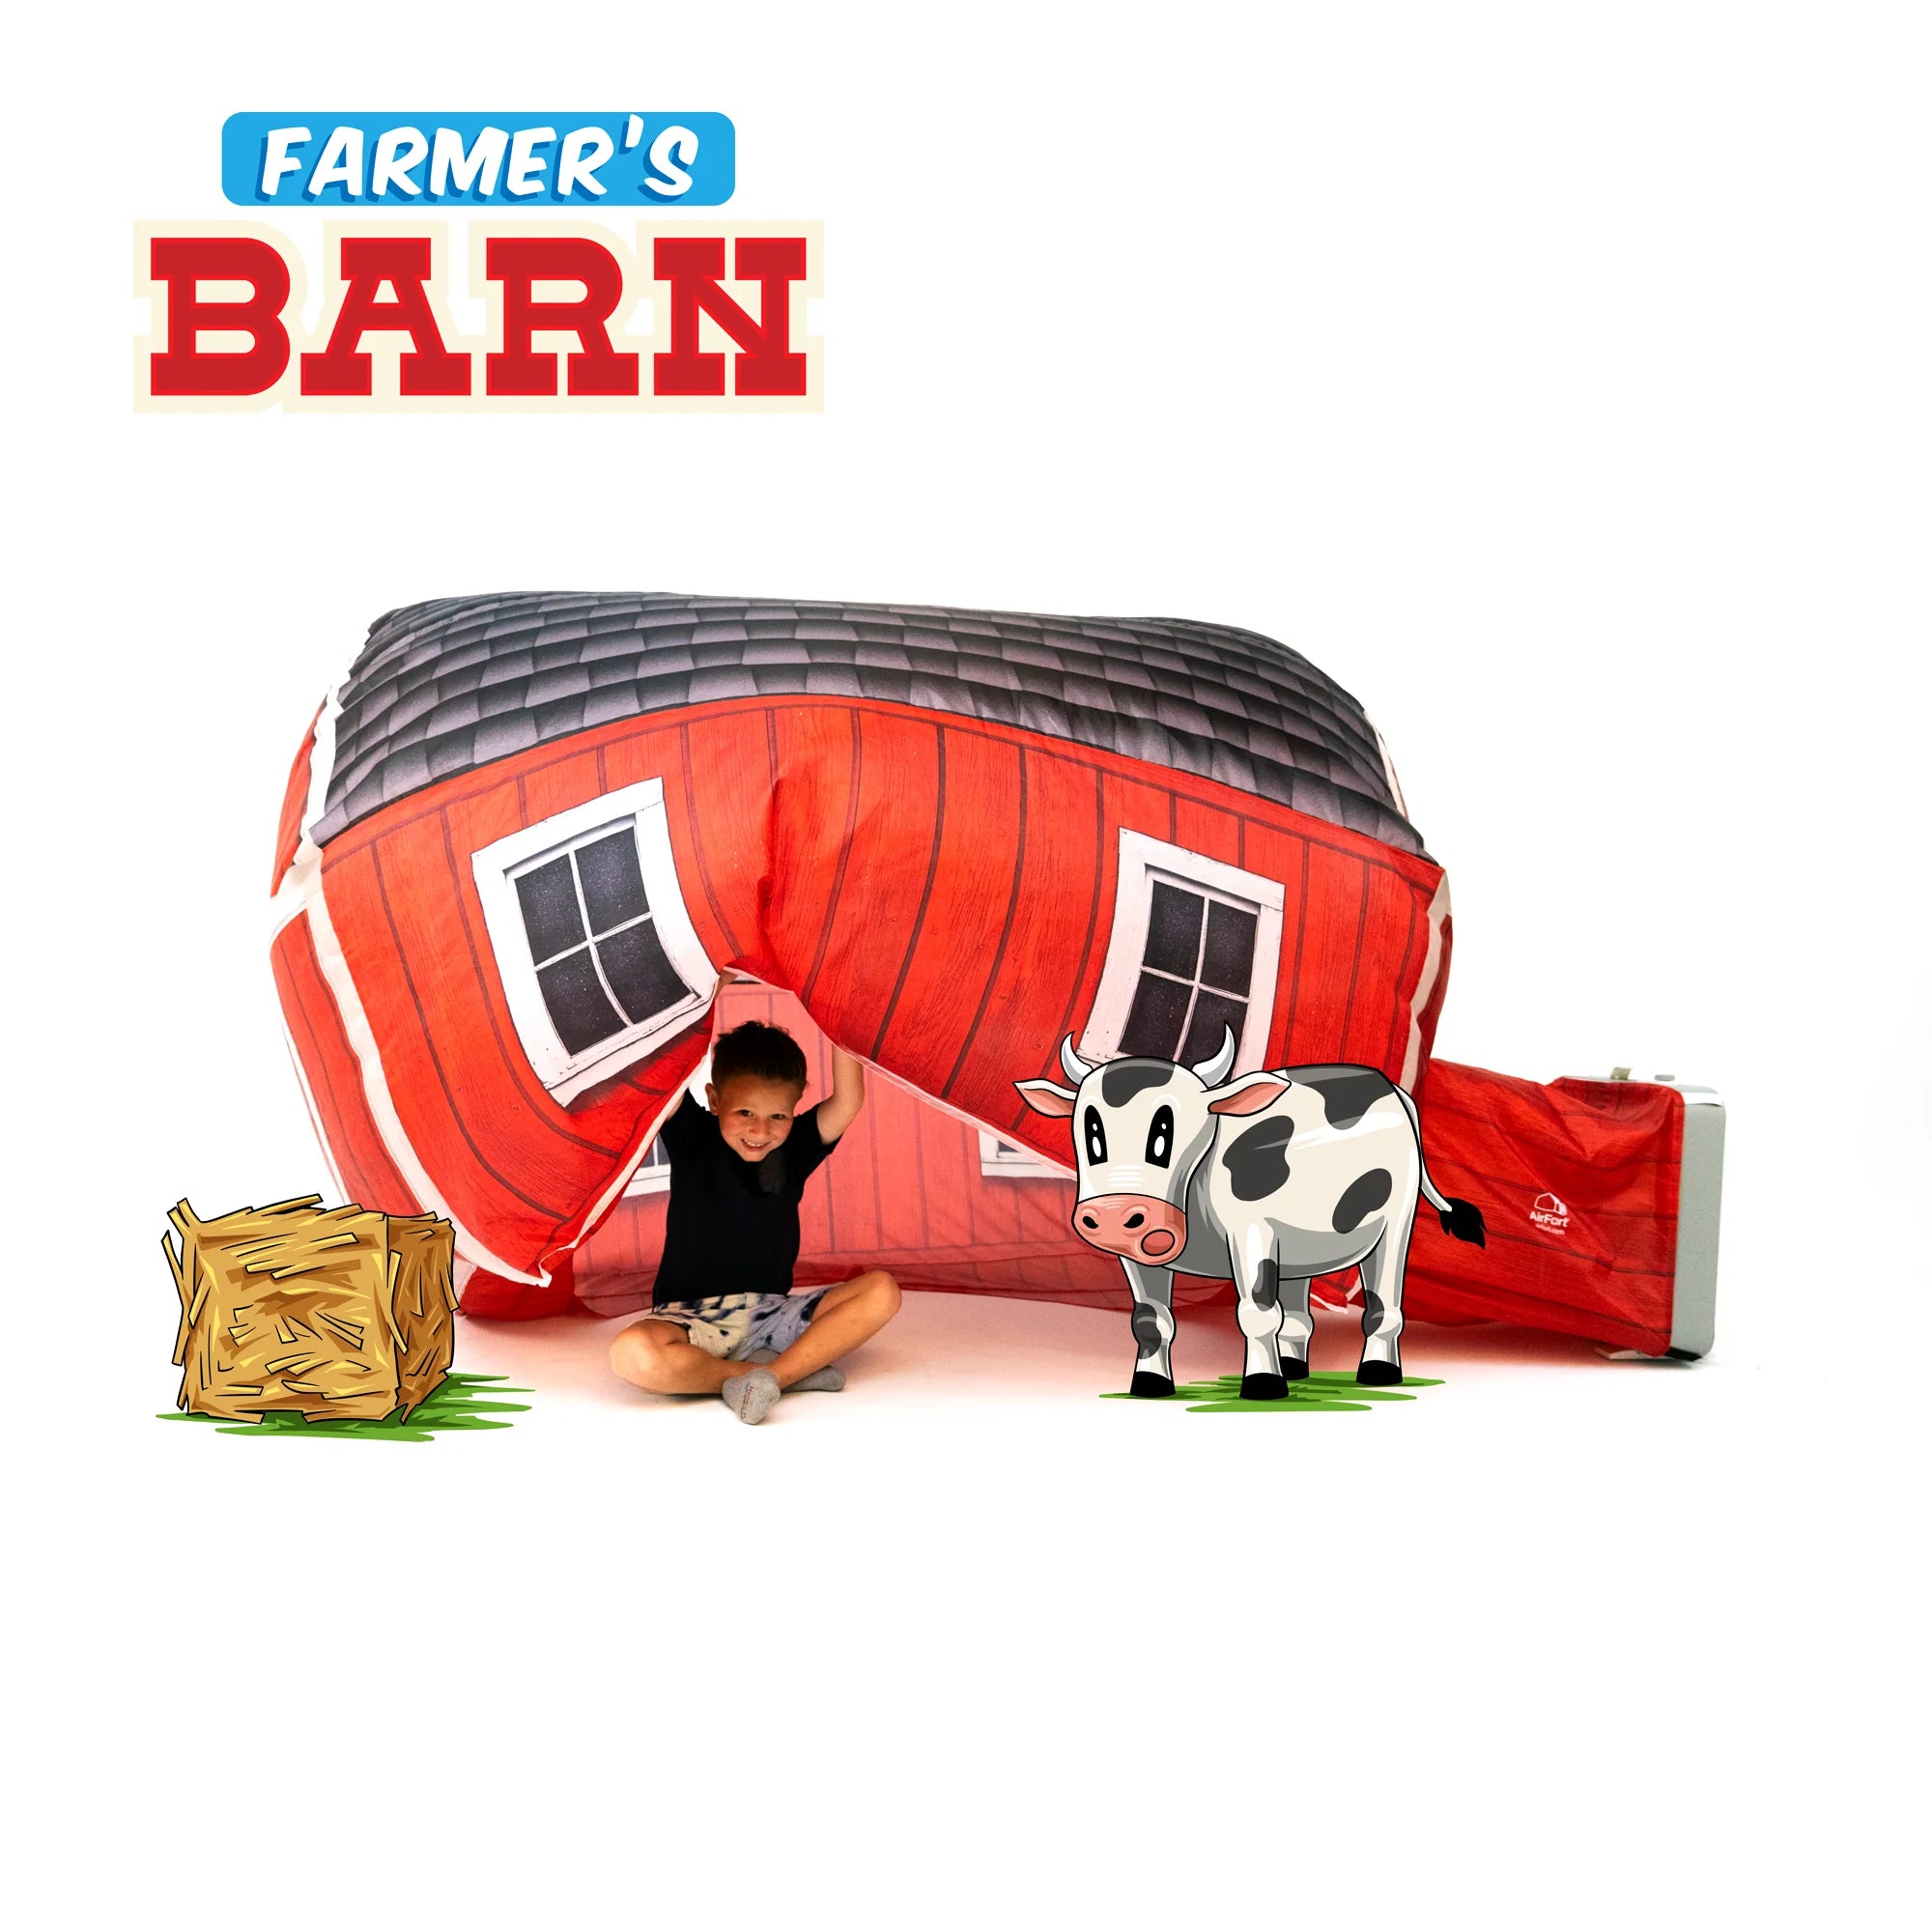 The Original AirFort - Farmer's Barn